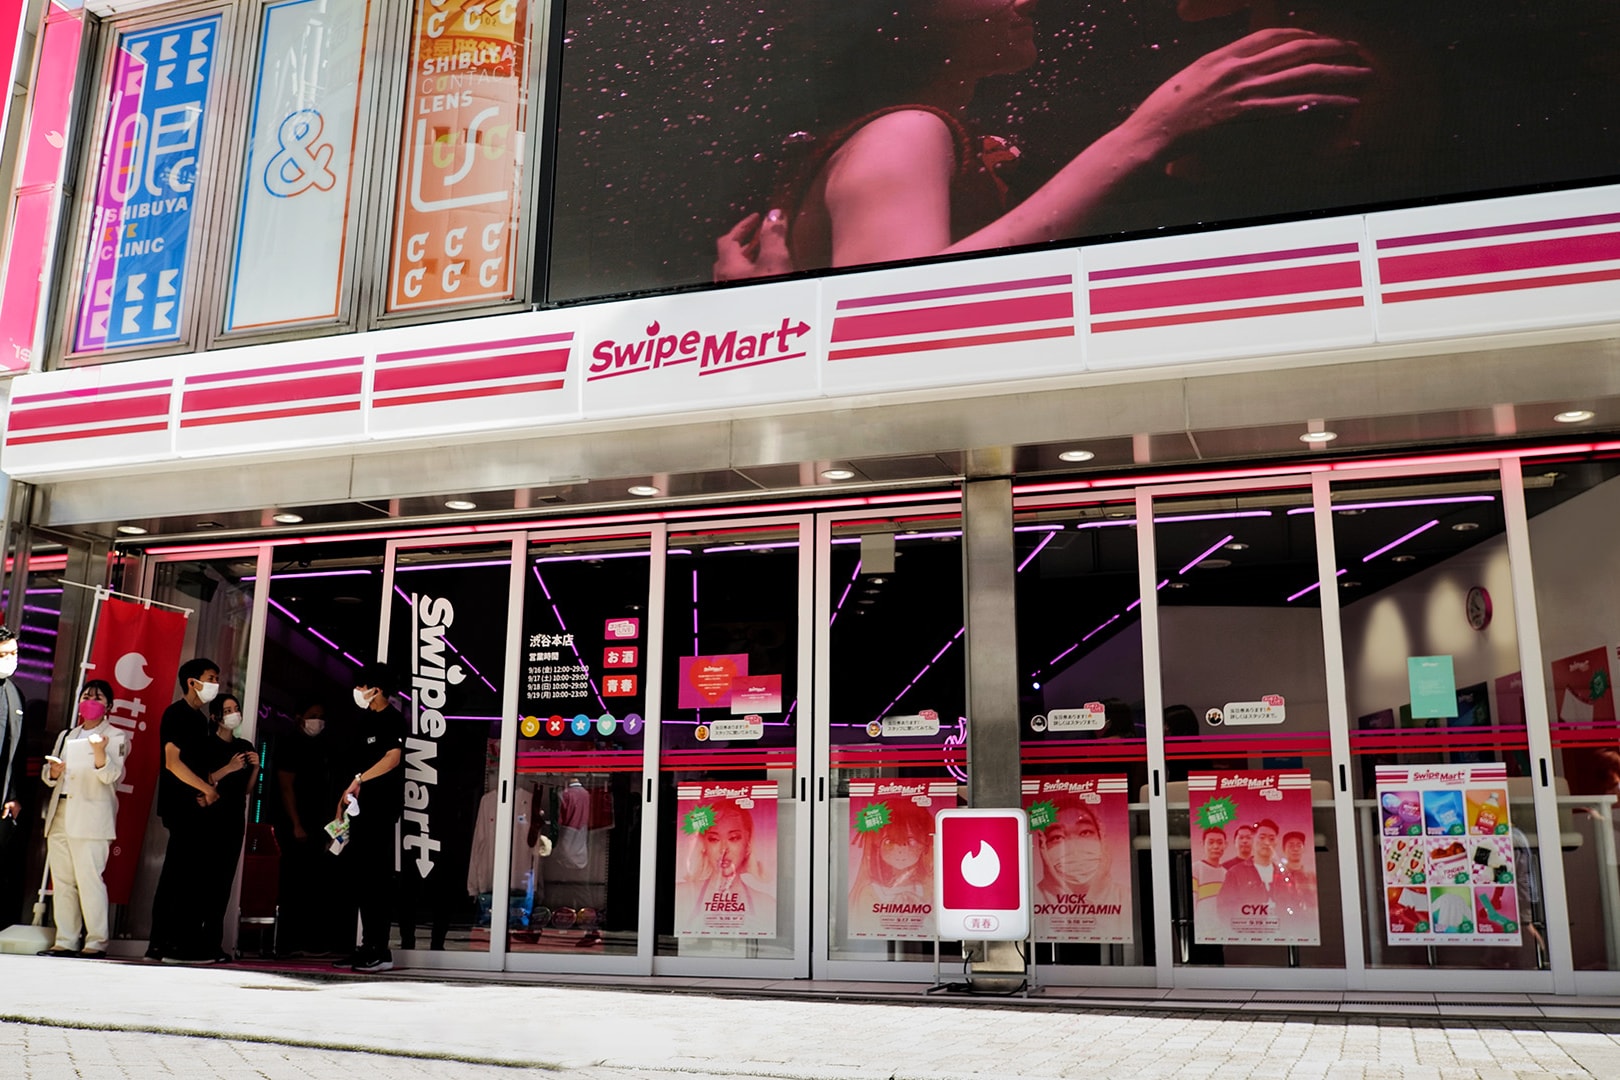 Tinder SwipeMart tokyo convenience store info apps dating online dating 